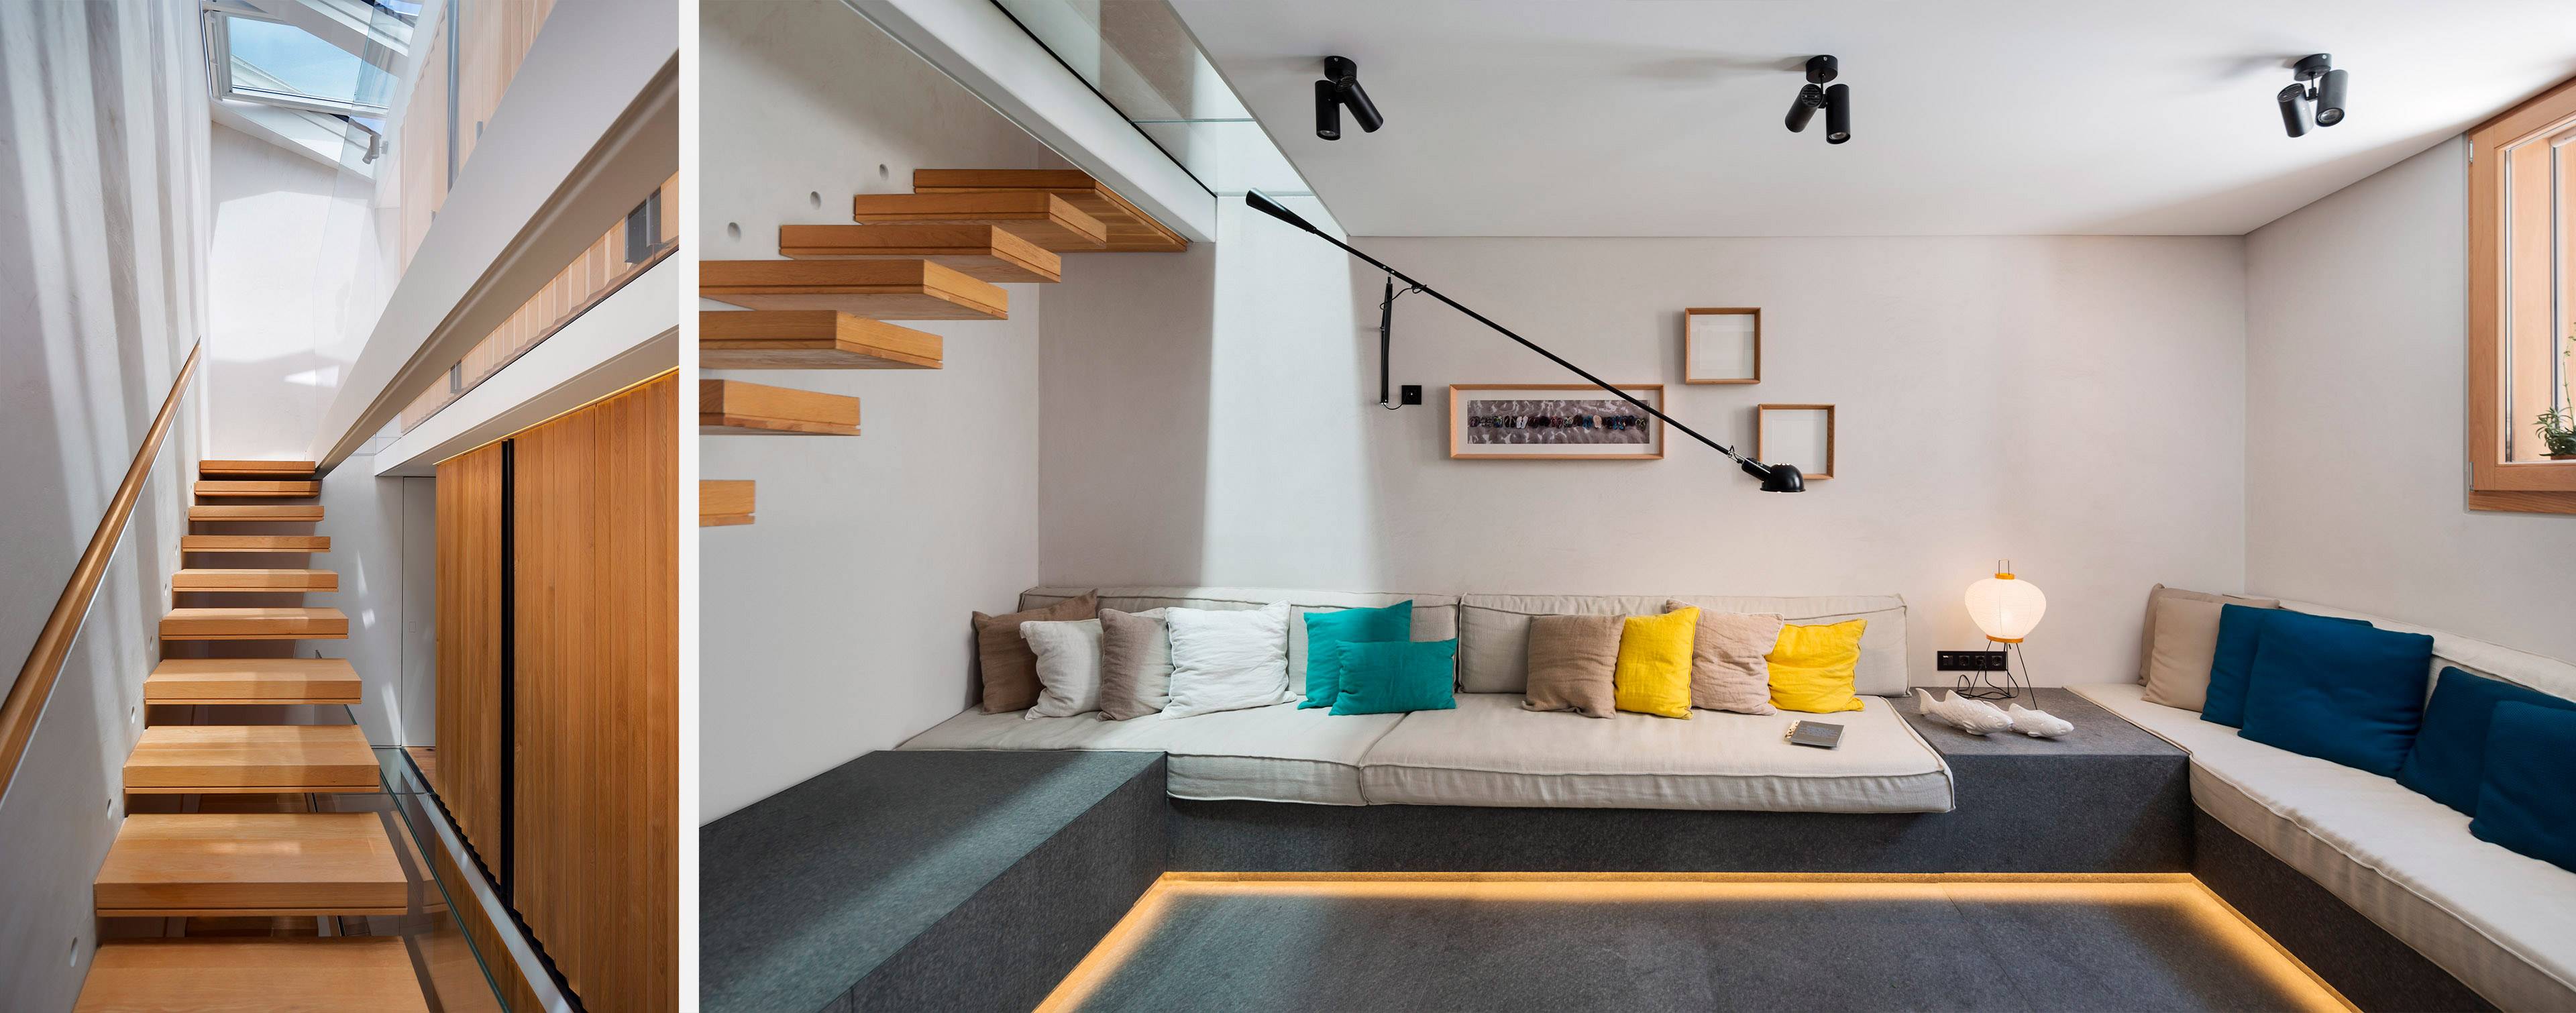 luv studio luxury architects algarve nano house IMG 02 - Nano House